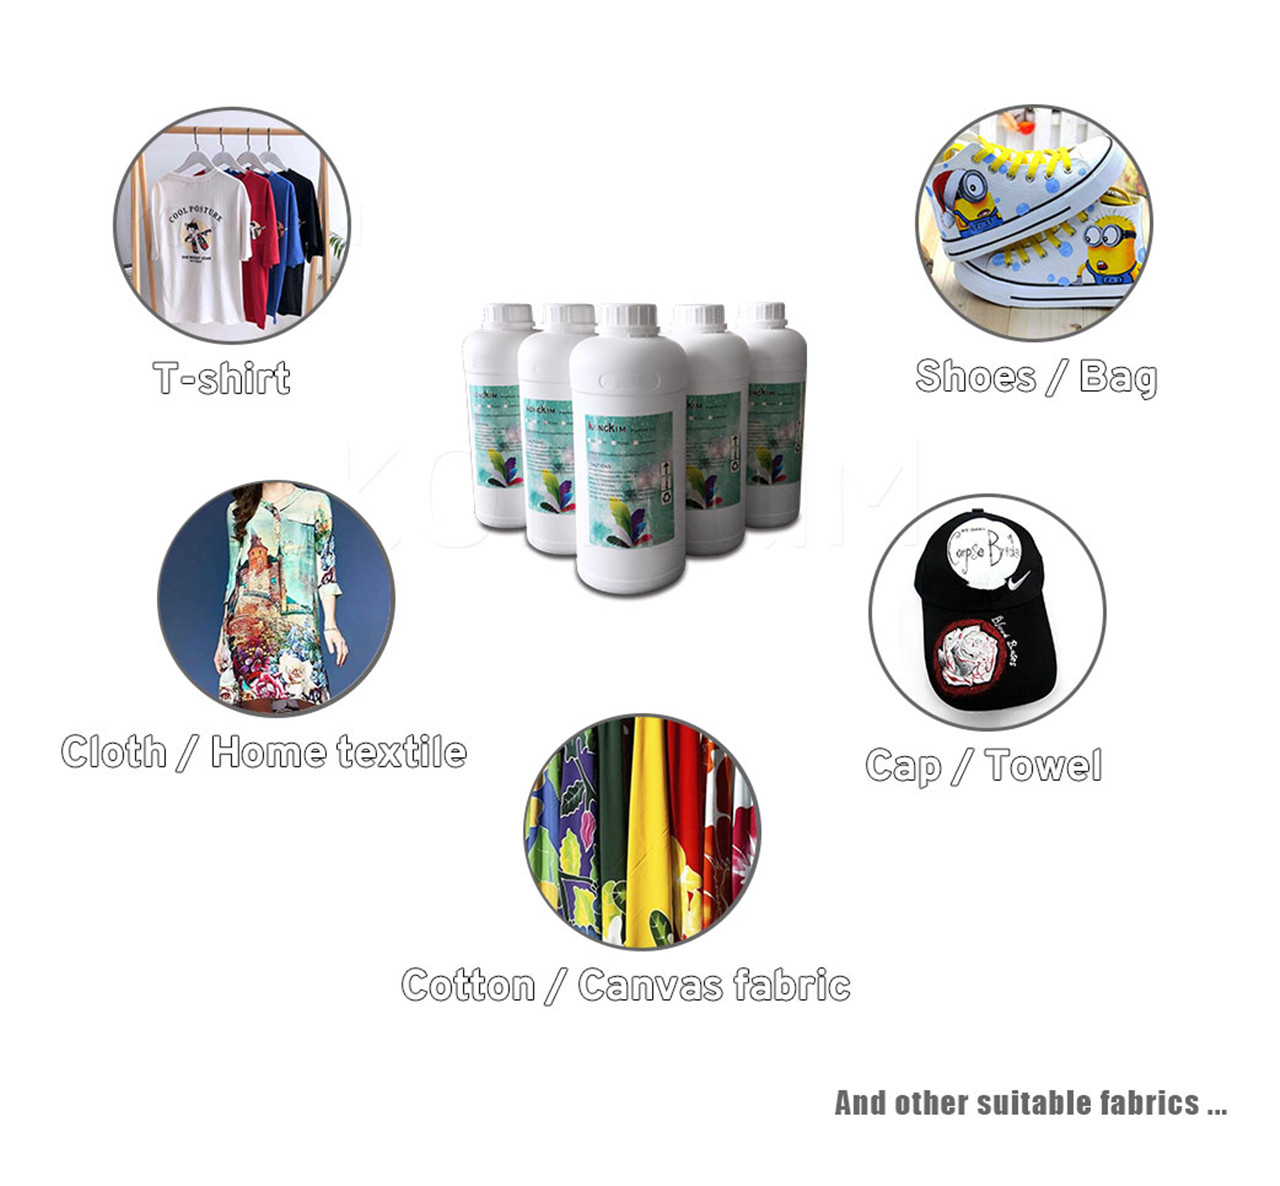 KONGKIM Textile Pigment Ink for various color cotton t-shirts printing-01